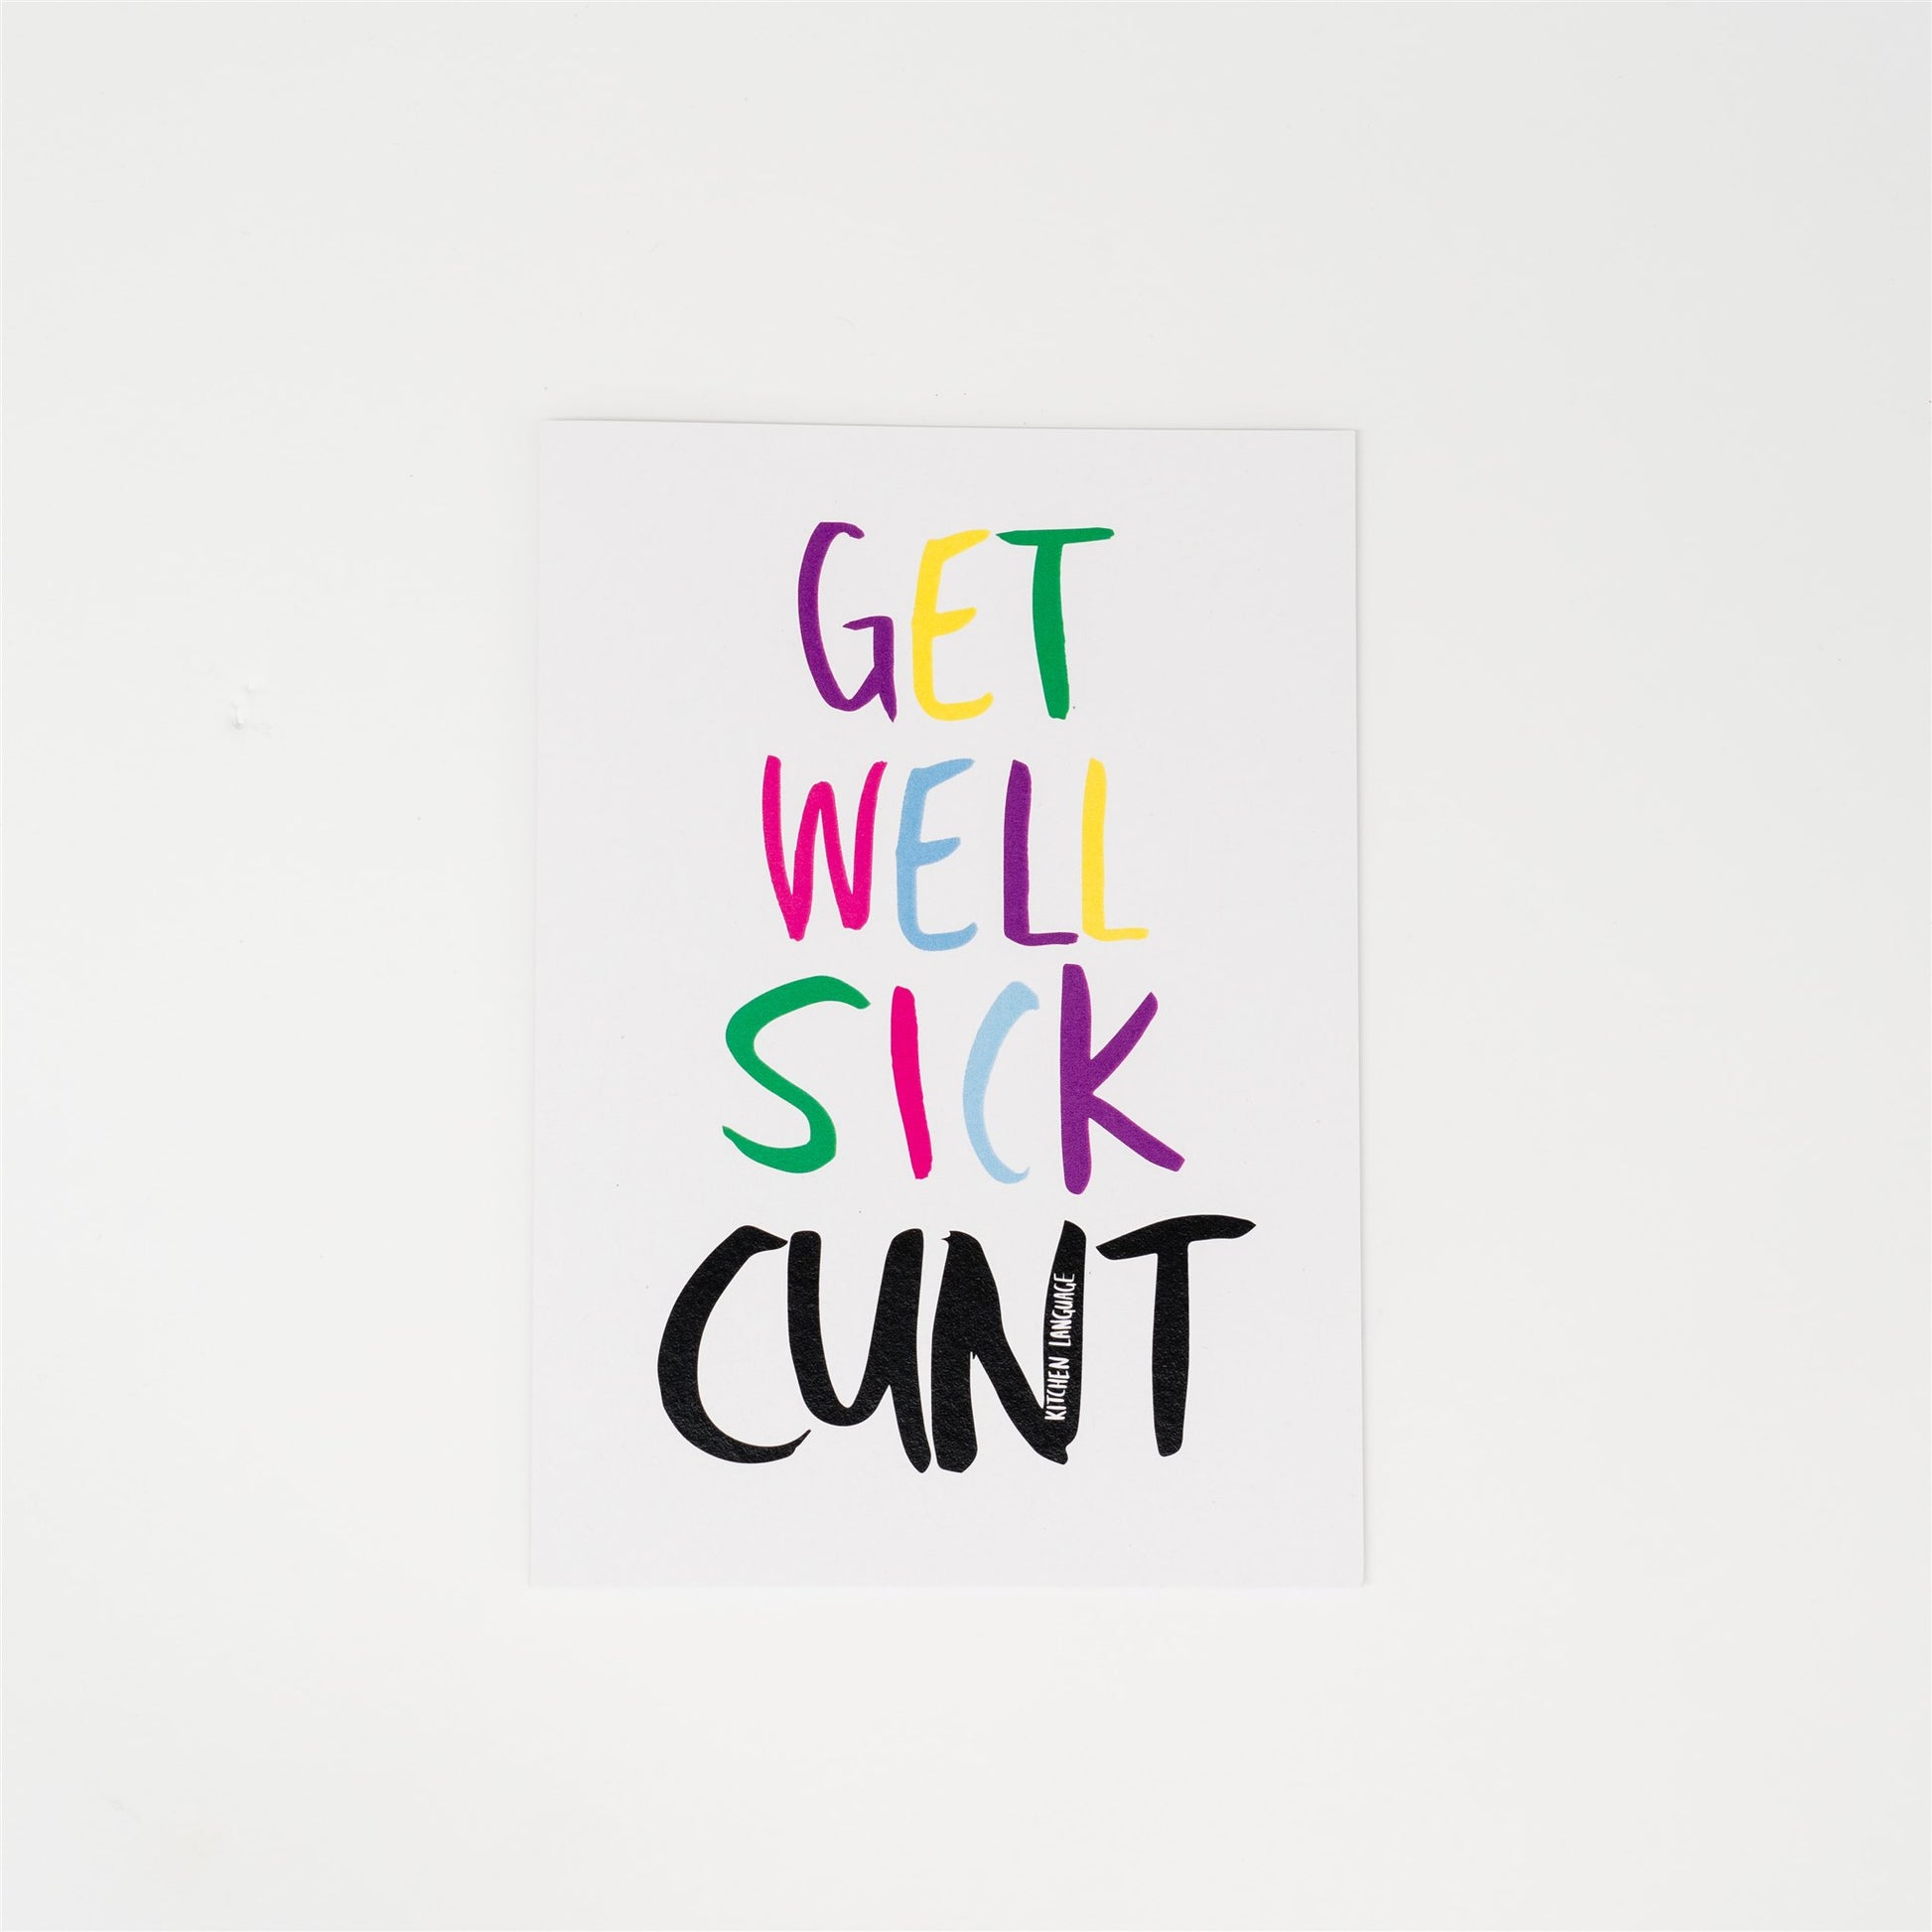 get well sick cunt- greeting card- kitchen language